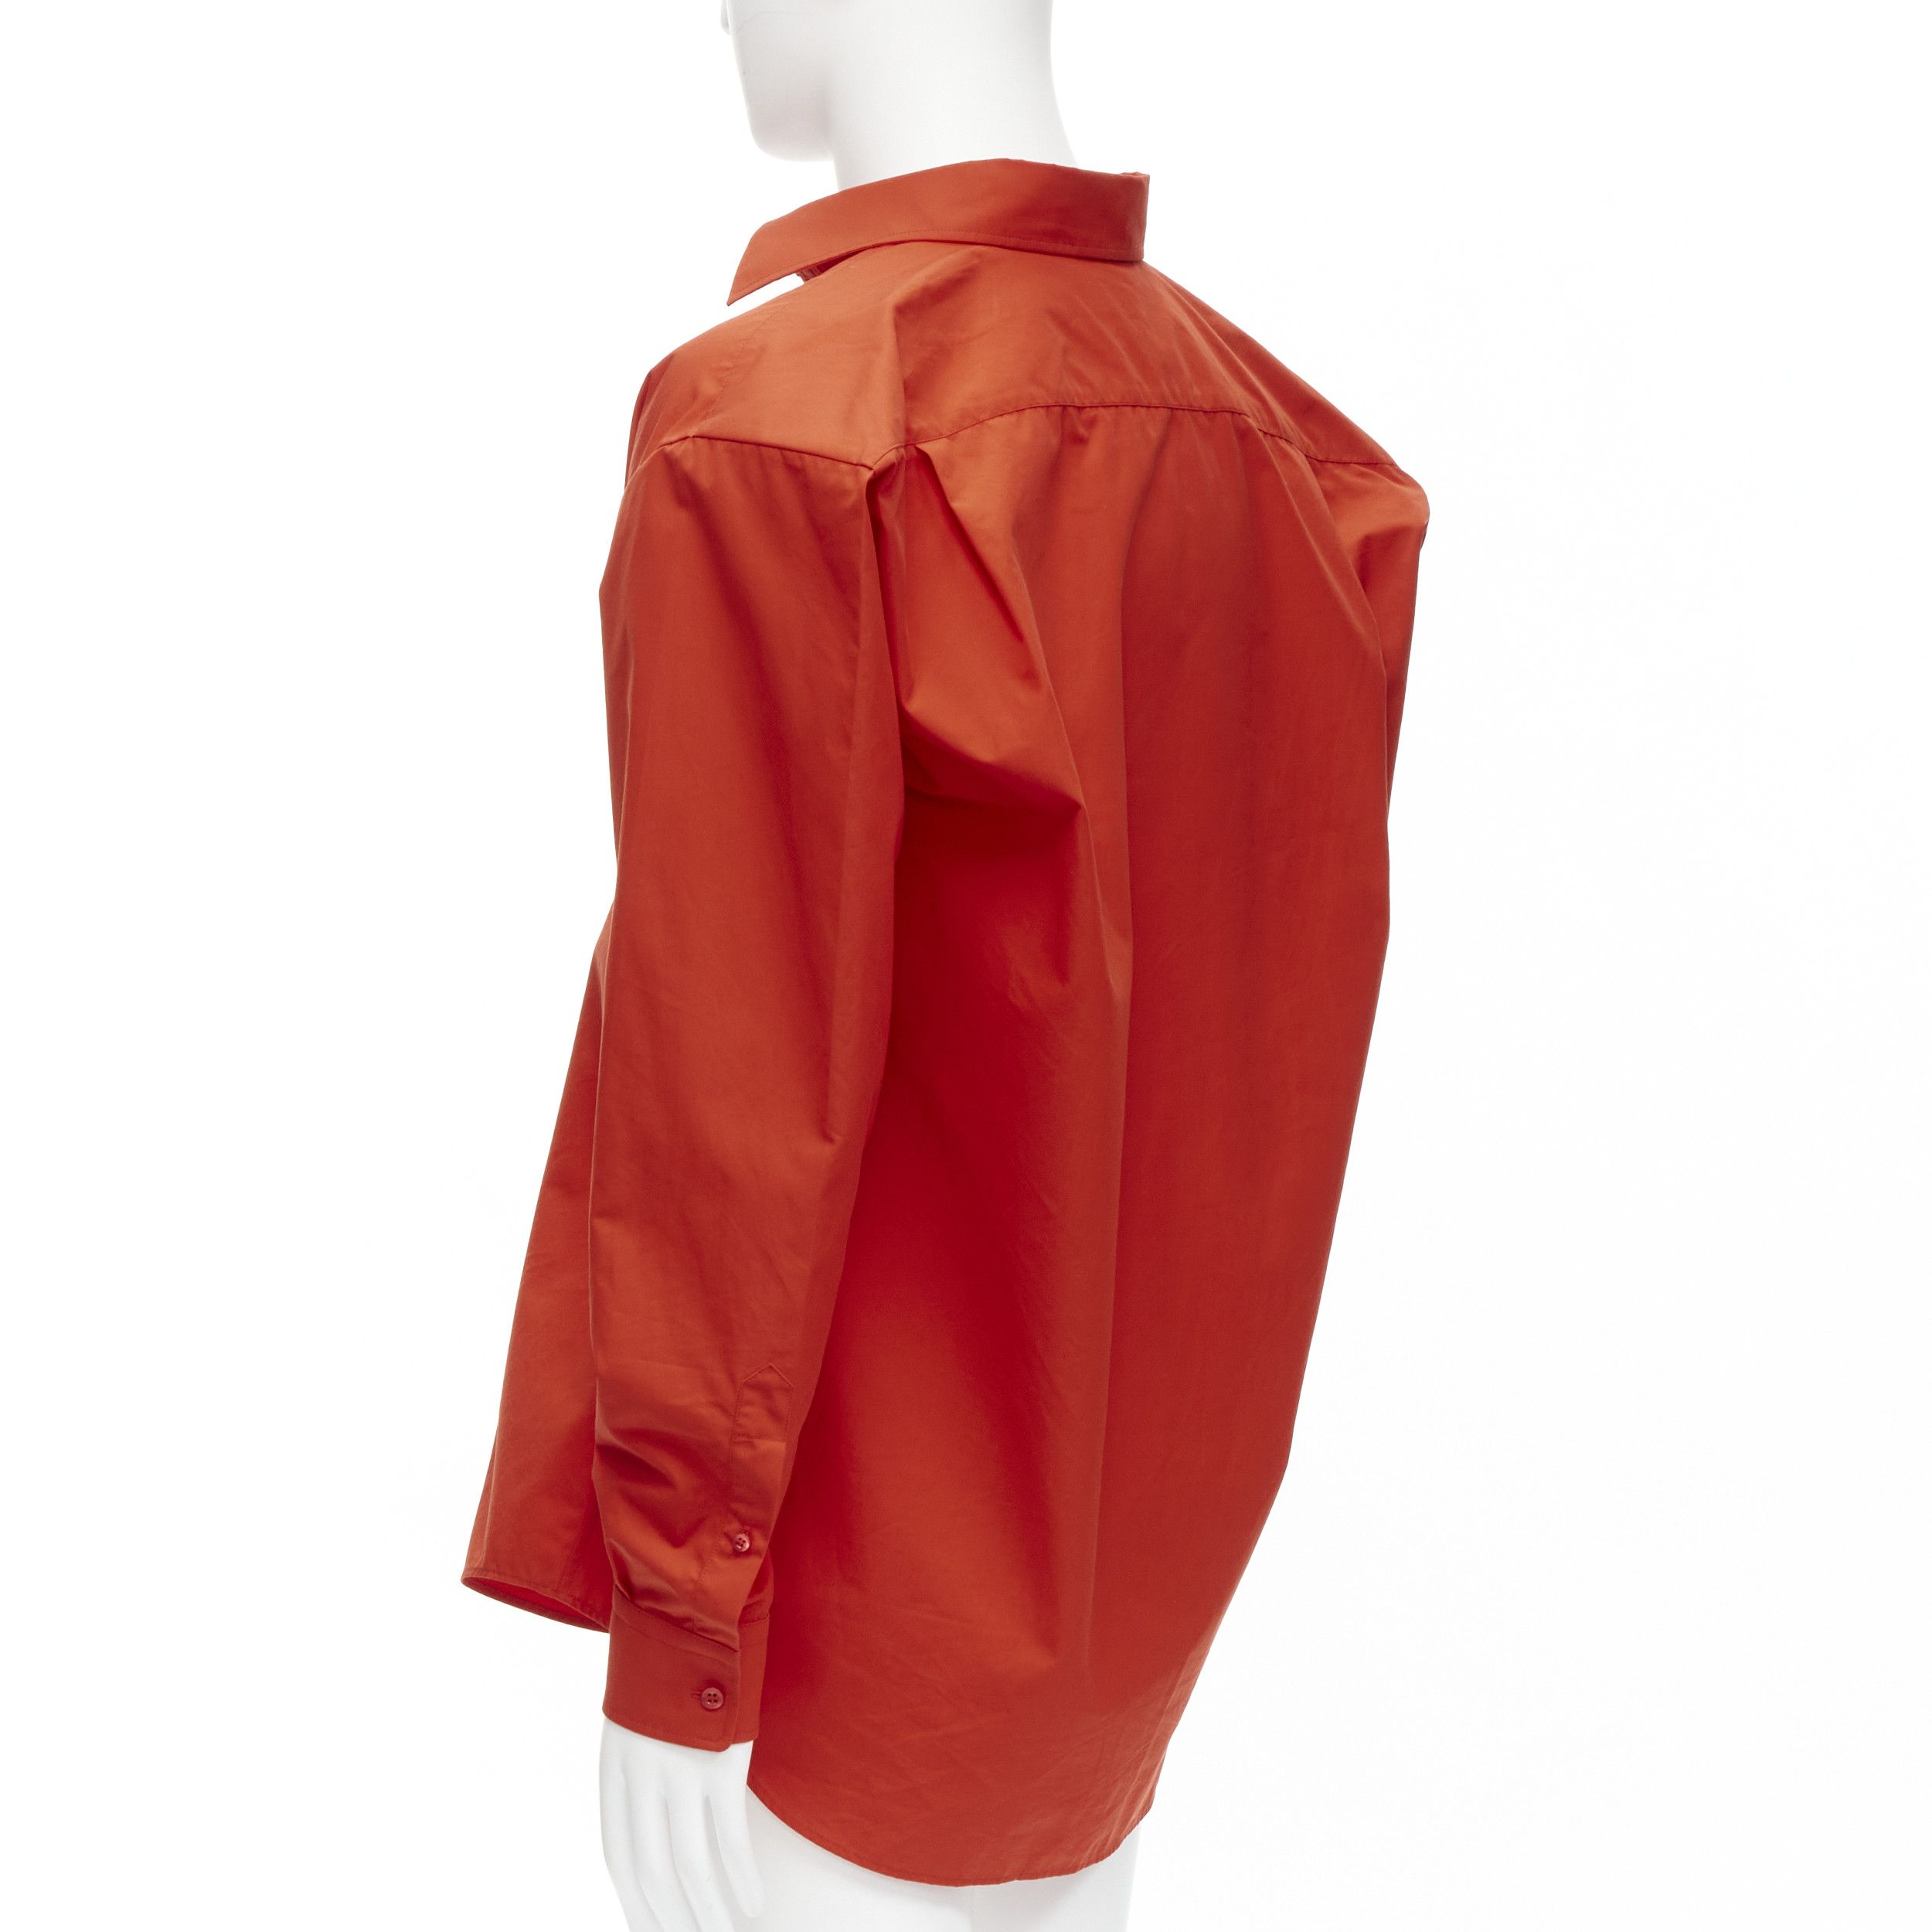 Balenciaga BALENCIAGA Cocoon red swing collar 3D cut oversized button down shirt Size M / US 6-8 / IT 42-44 - 5 Thumbnail